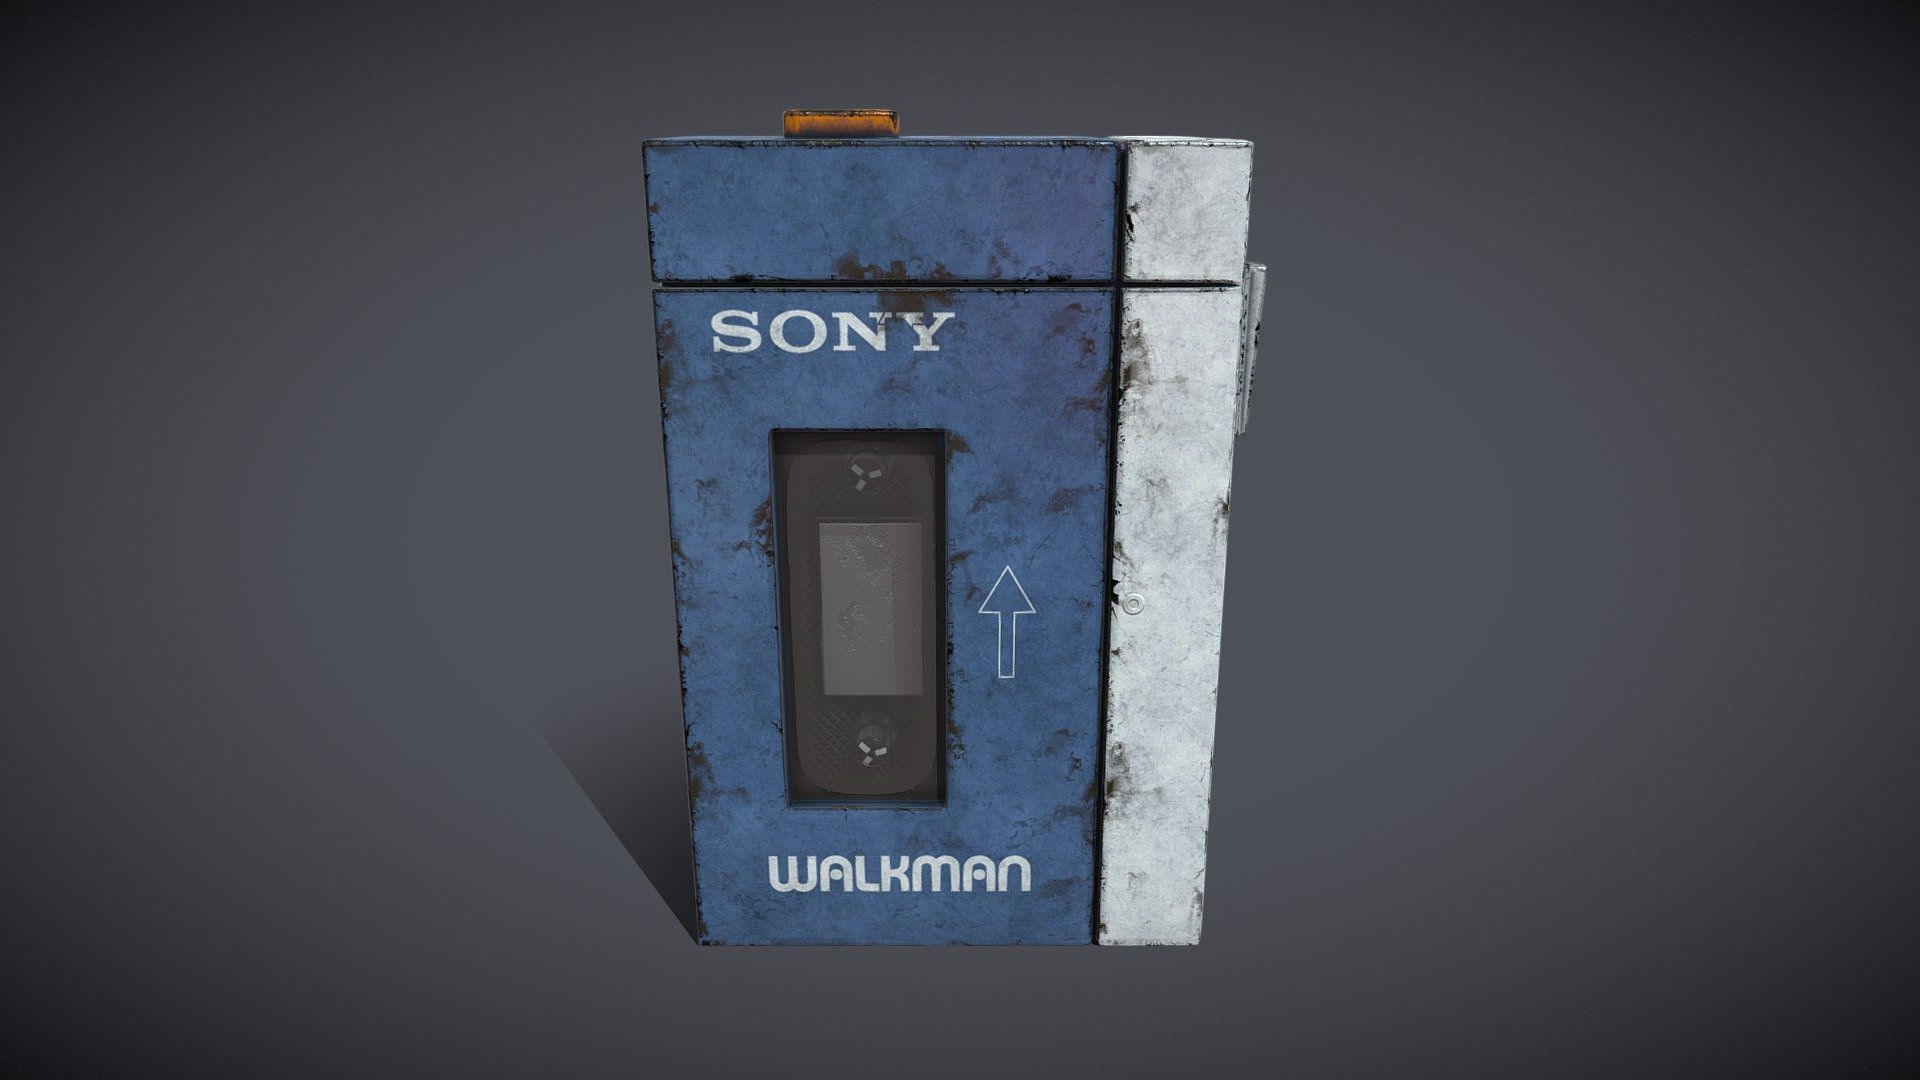 Sony Walkman Worn Damaged